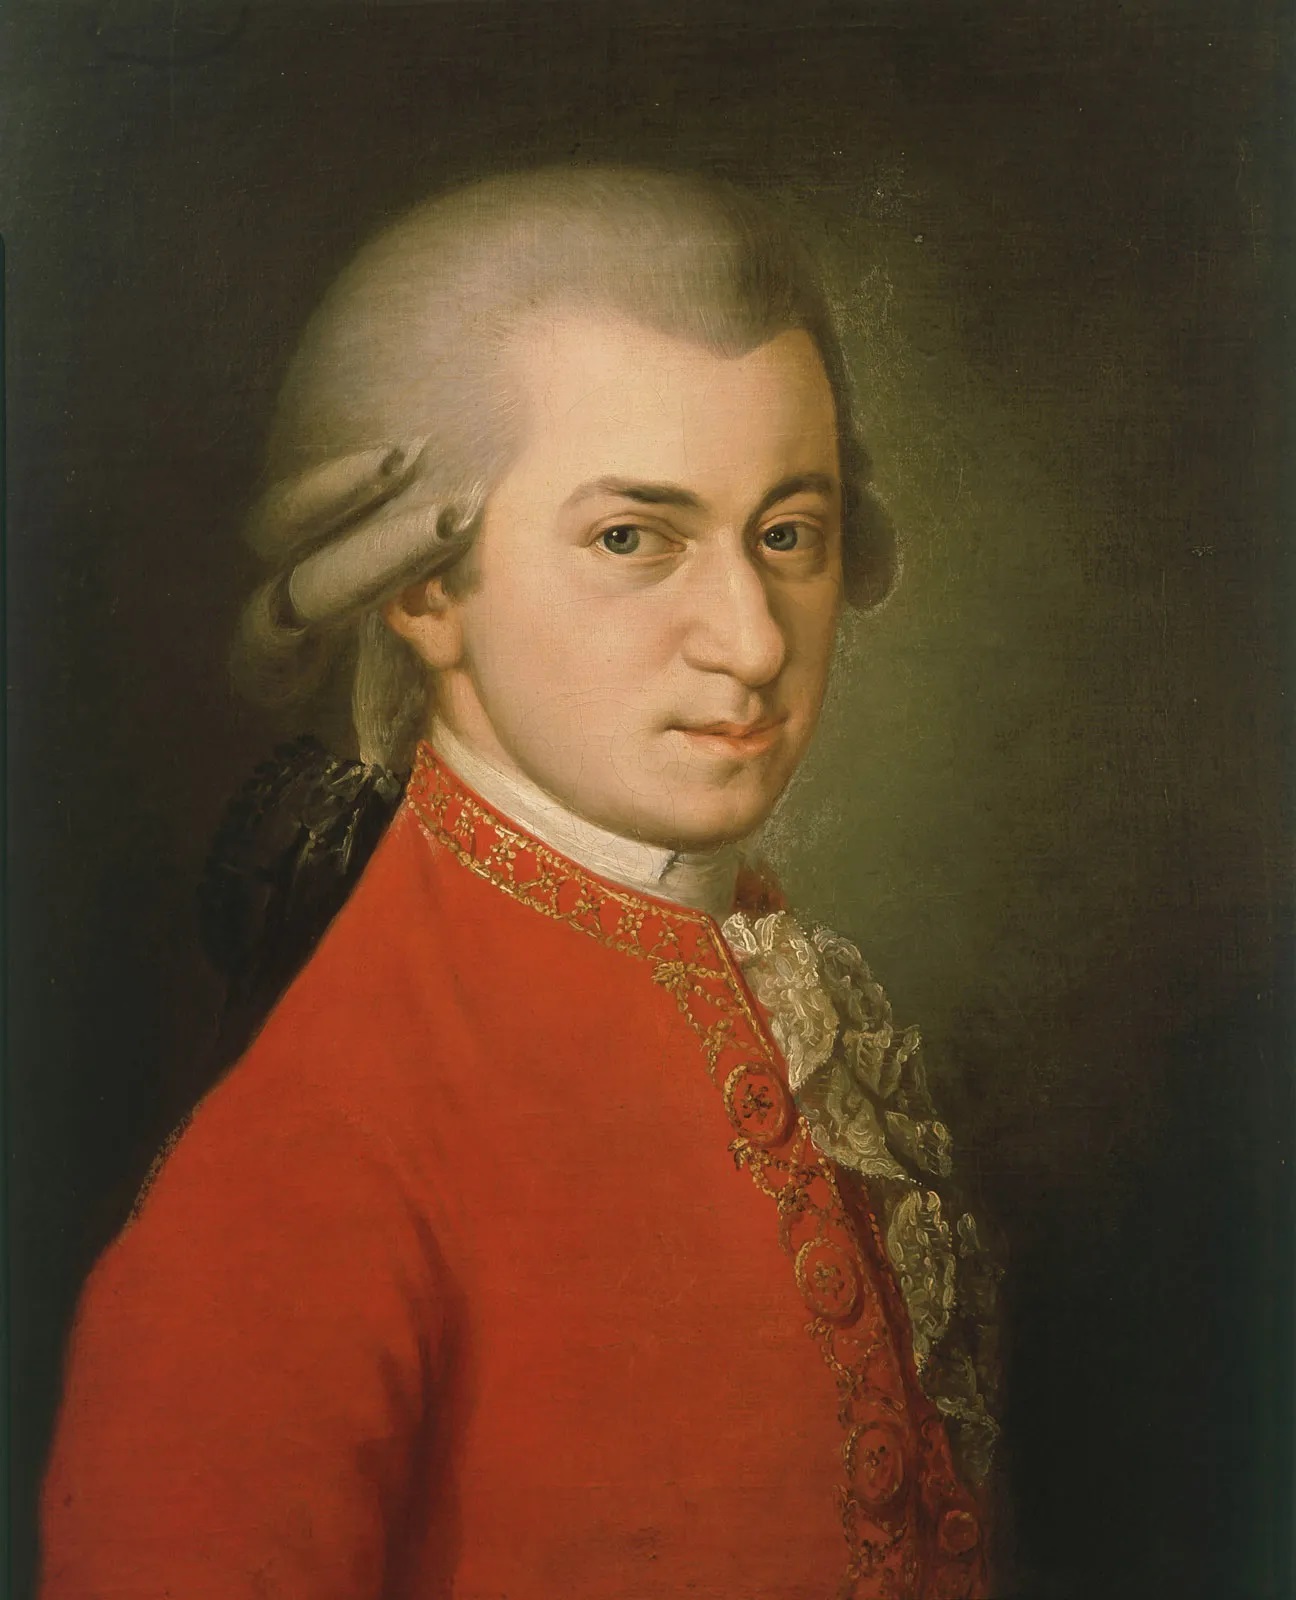 Wolfgang Amadeus Mozart.jpg